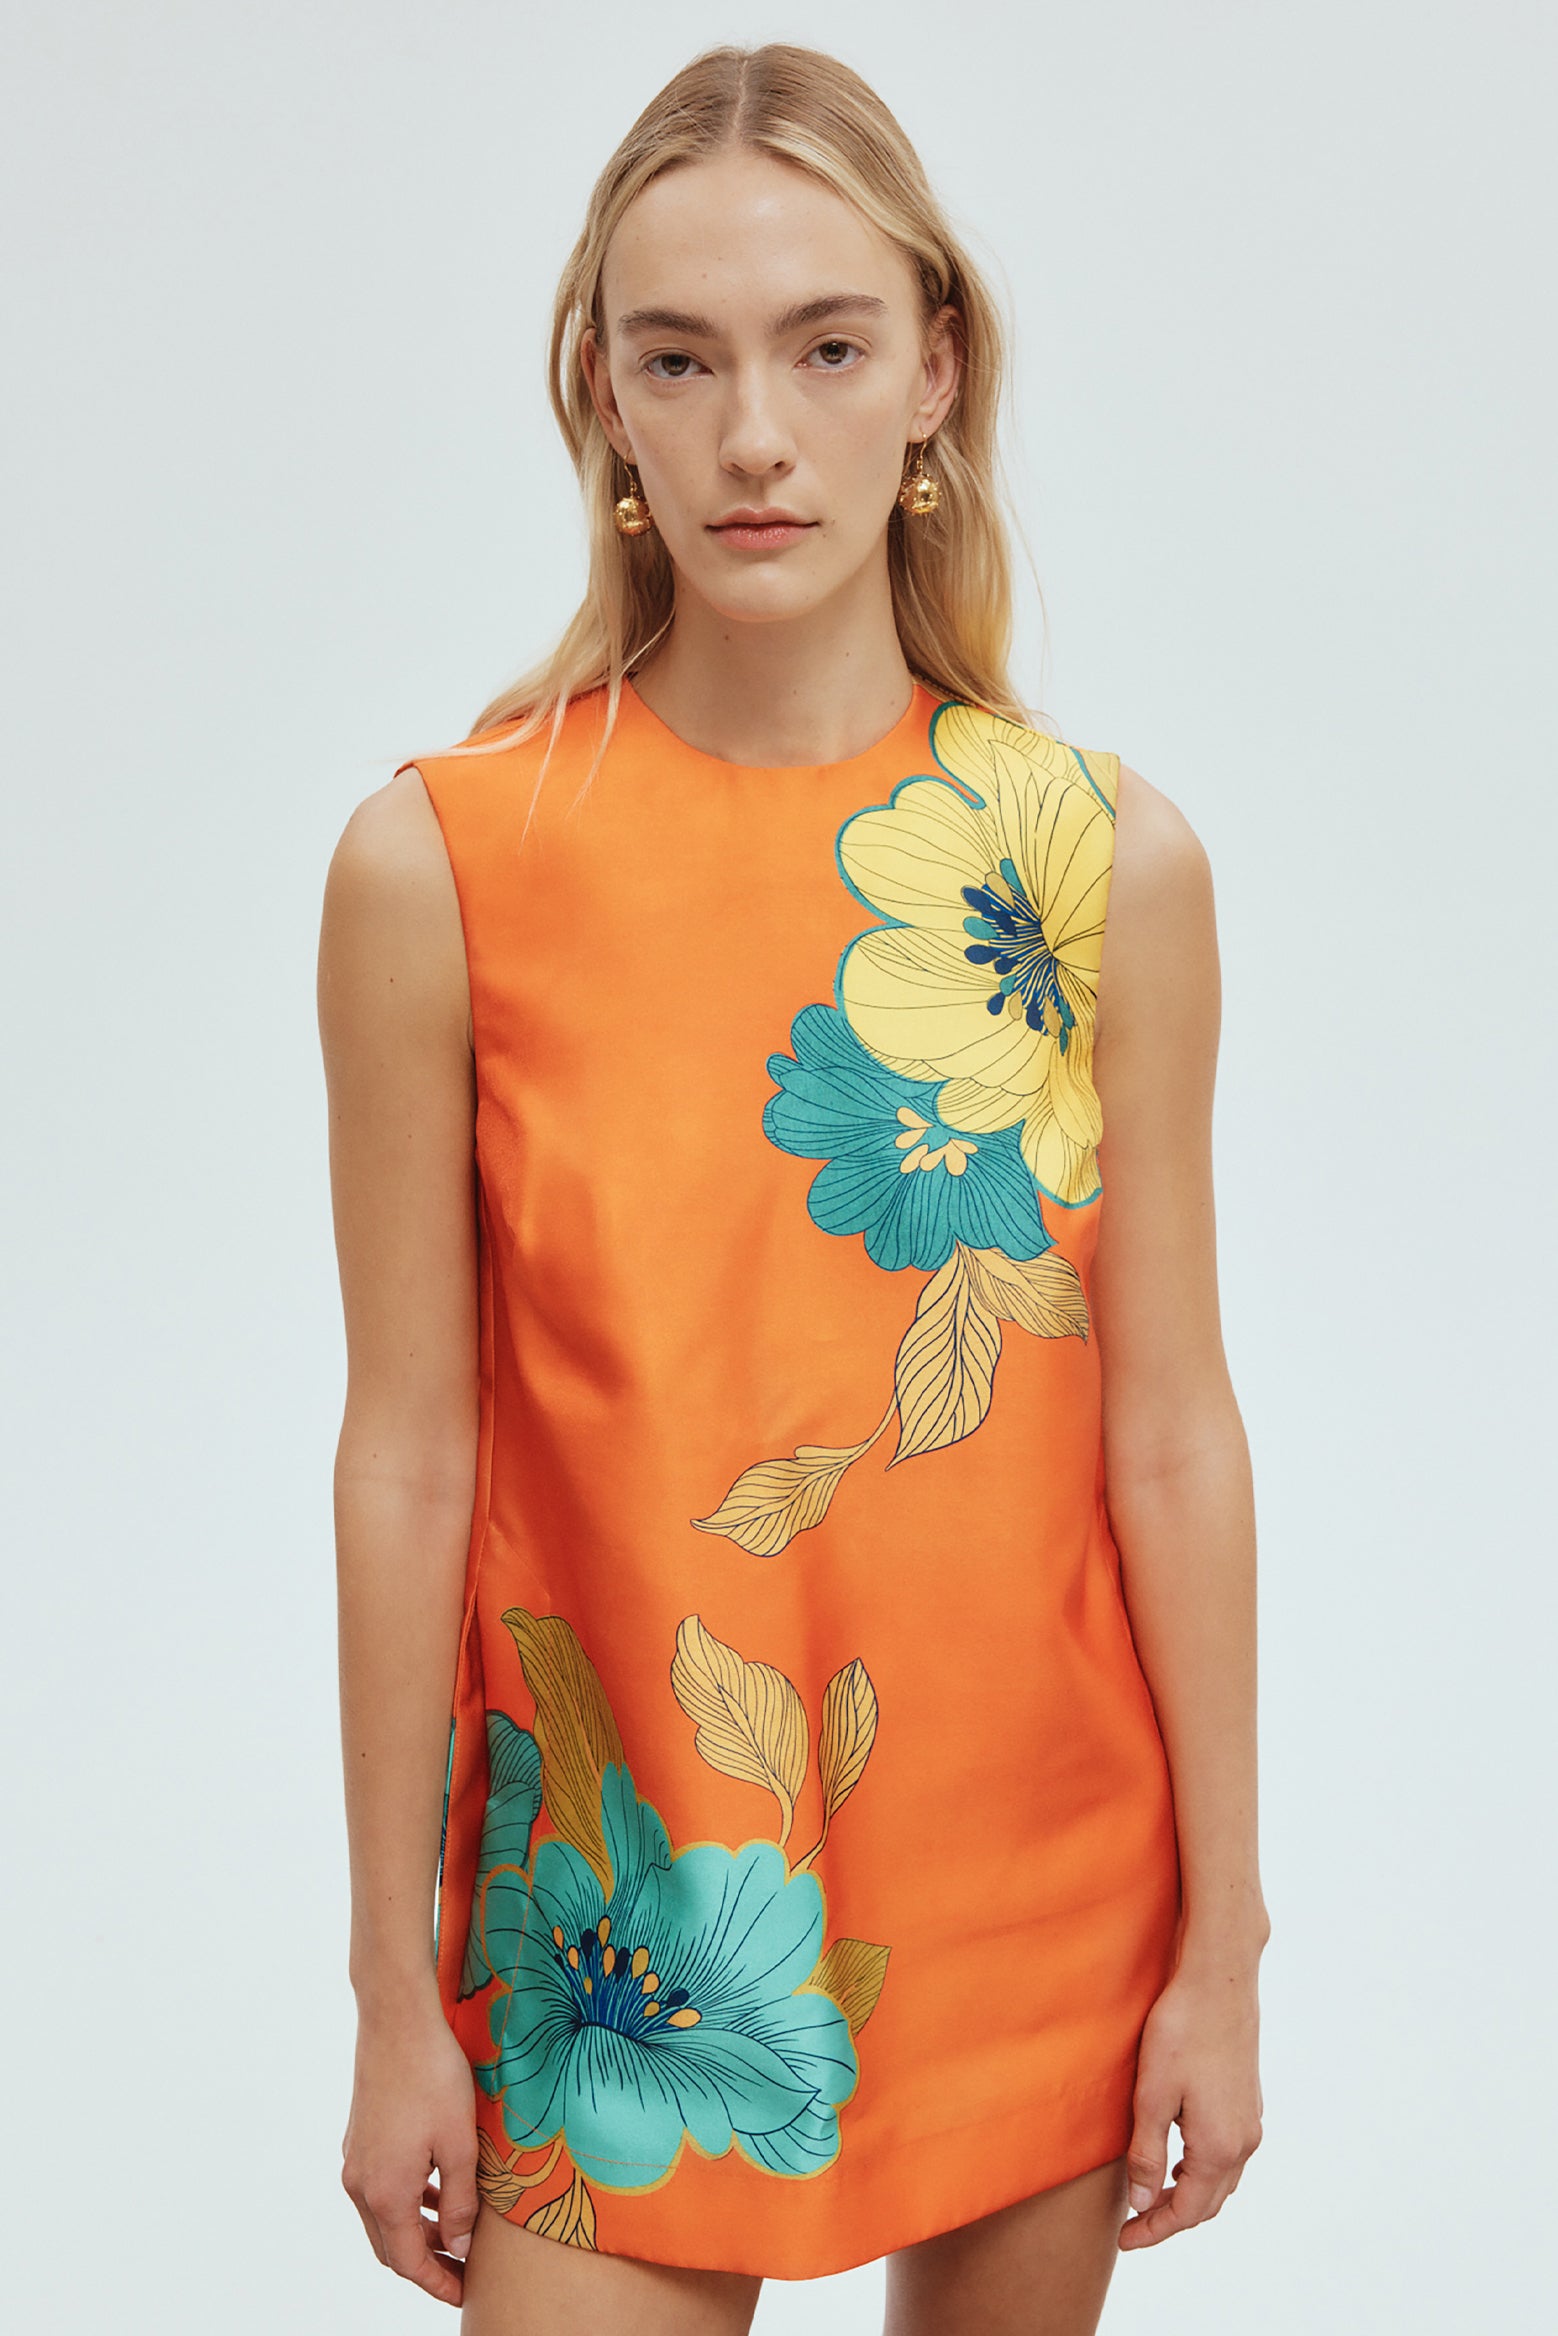 Alémais Piato Mini Dress in Marigold available at The New Trend Australia.